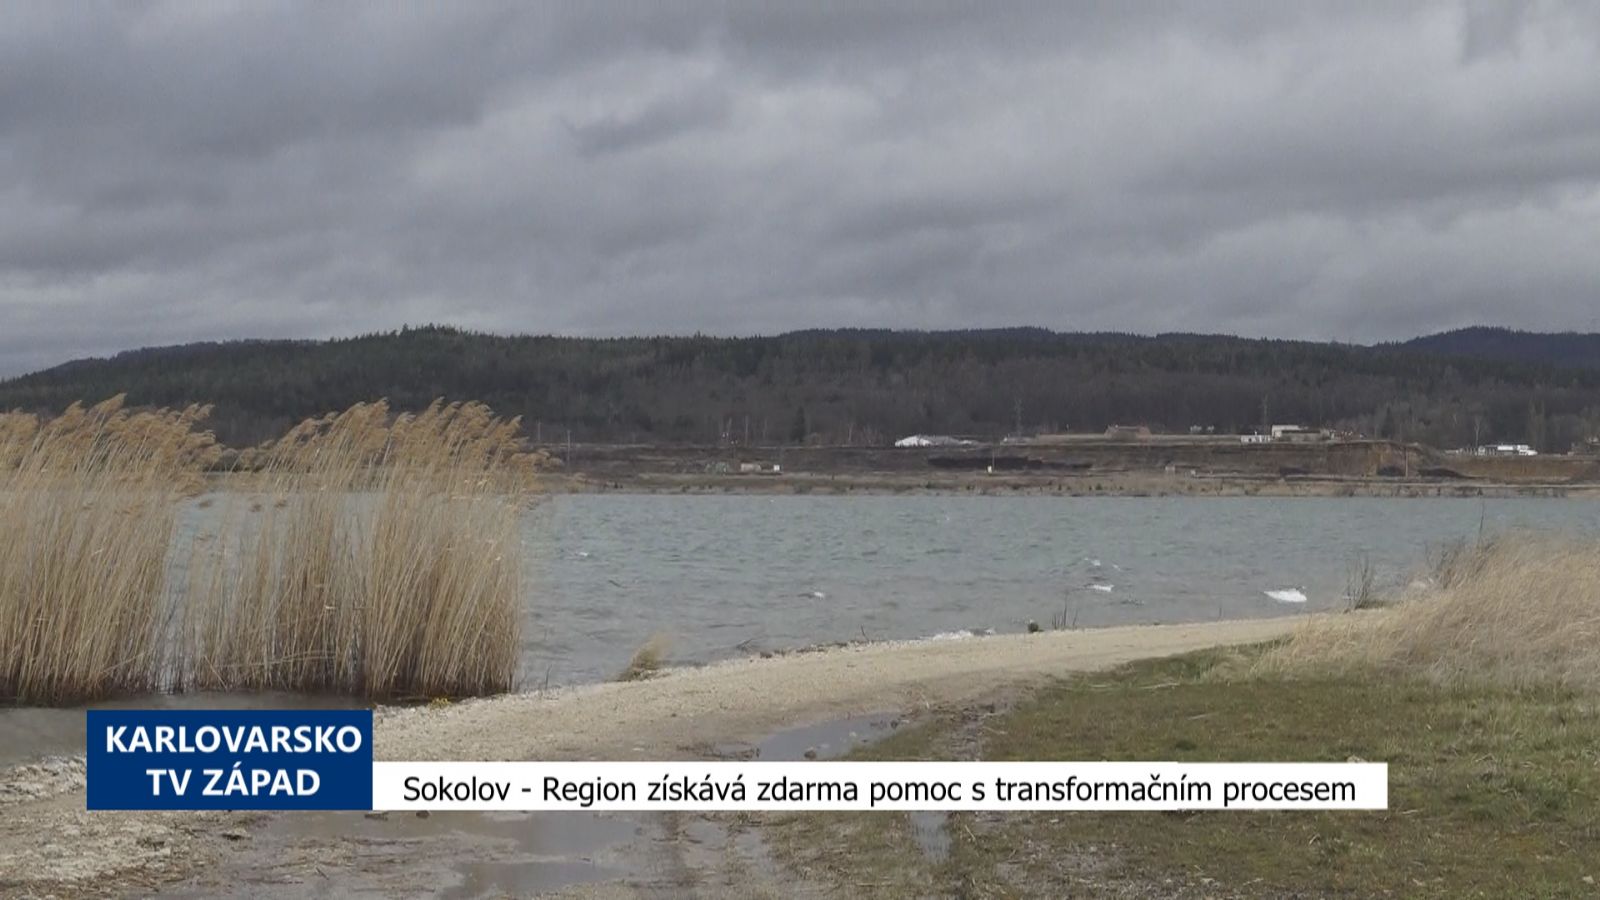 Sokolov: Region získává zdarma pomoc s transformačním procesem (TV Západ)